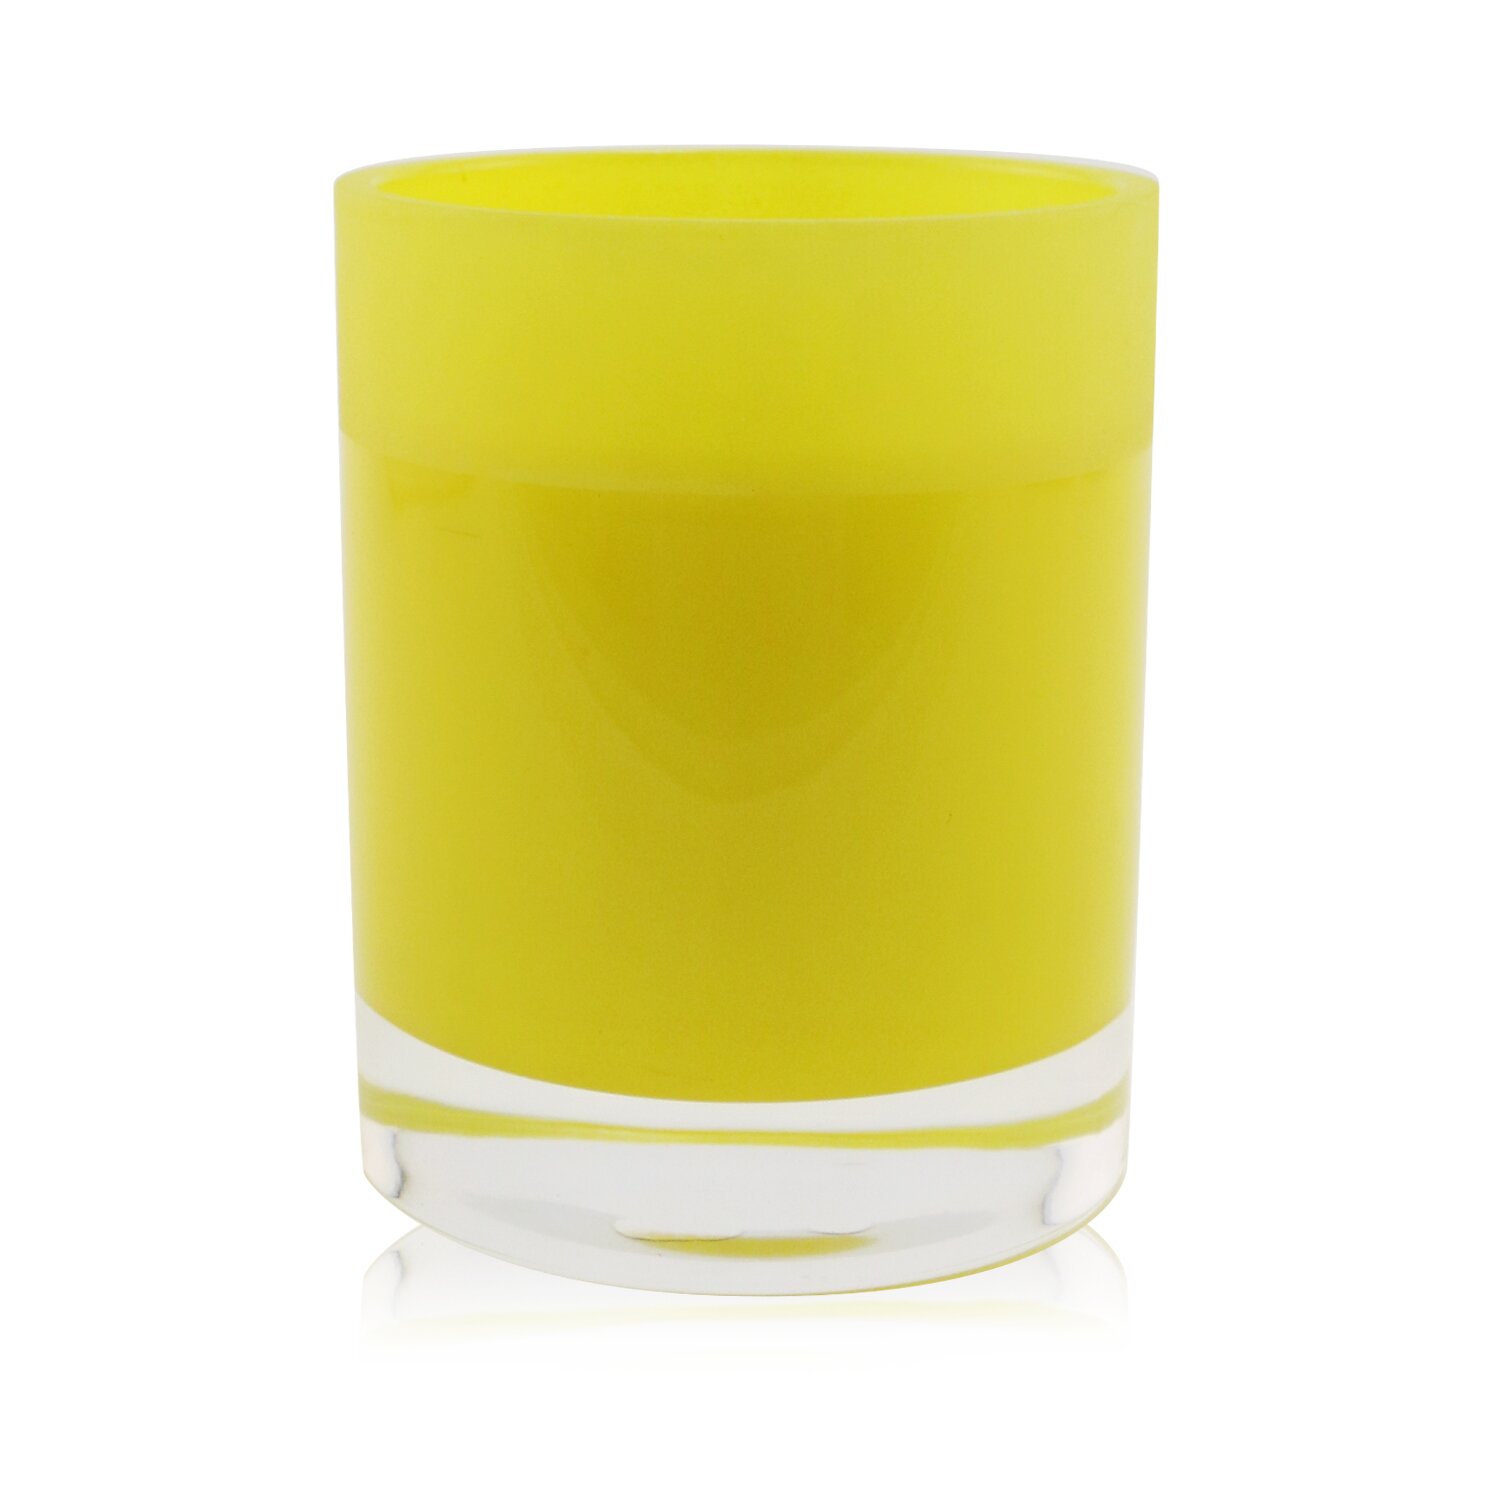 Molton Brown Single Wick Candle - Orange & Bergamot 180g/6.3oz